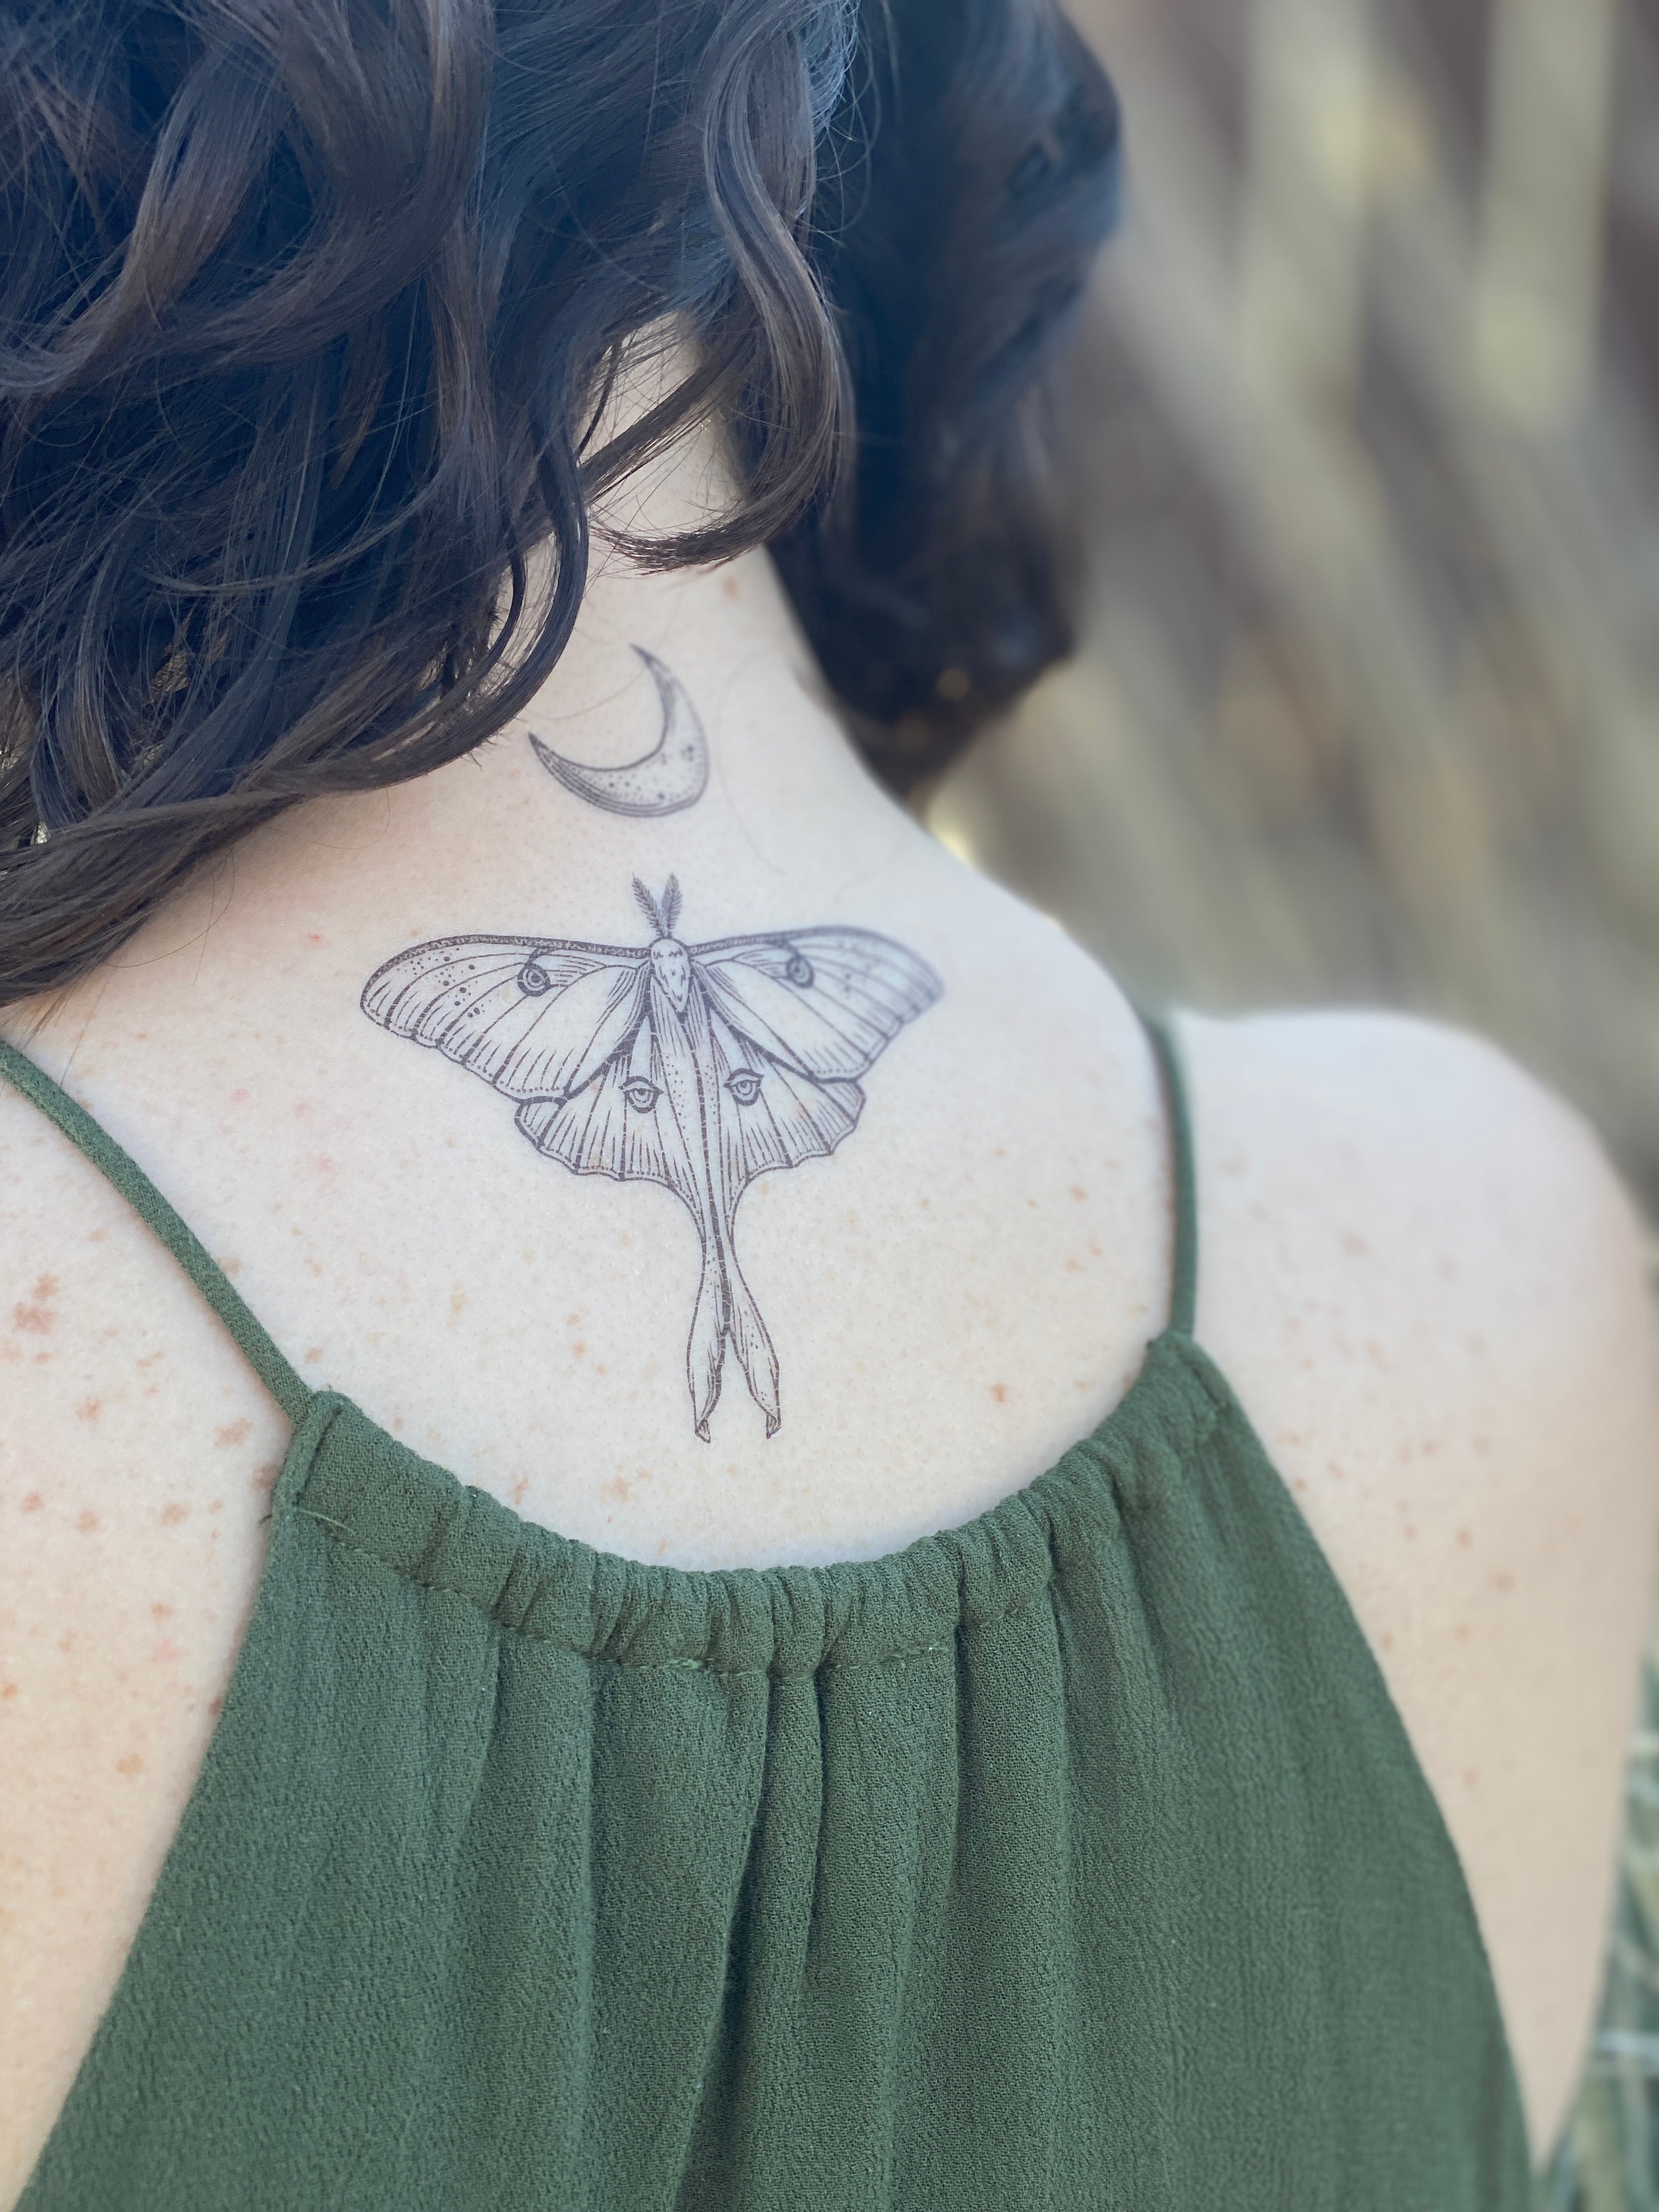 102 Magical Luna Moth Tattoo Ideas and Meanings  Body Art Guru